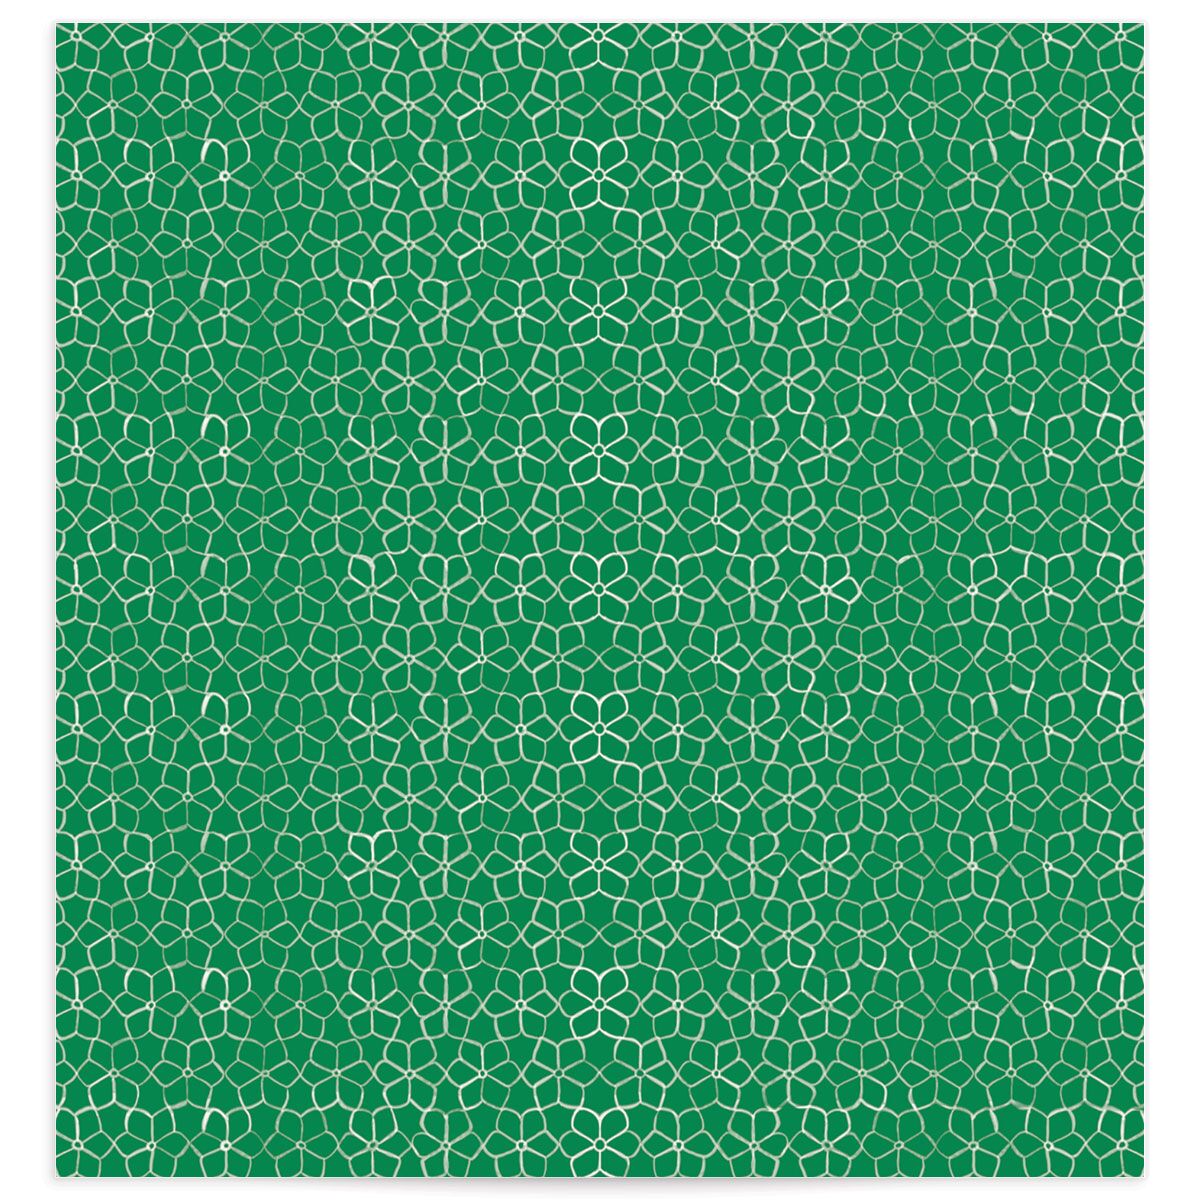 Marrakesh Tile Envelope Liners